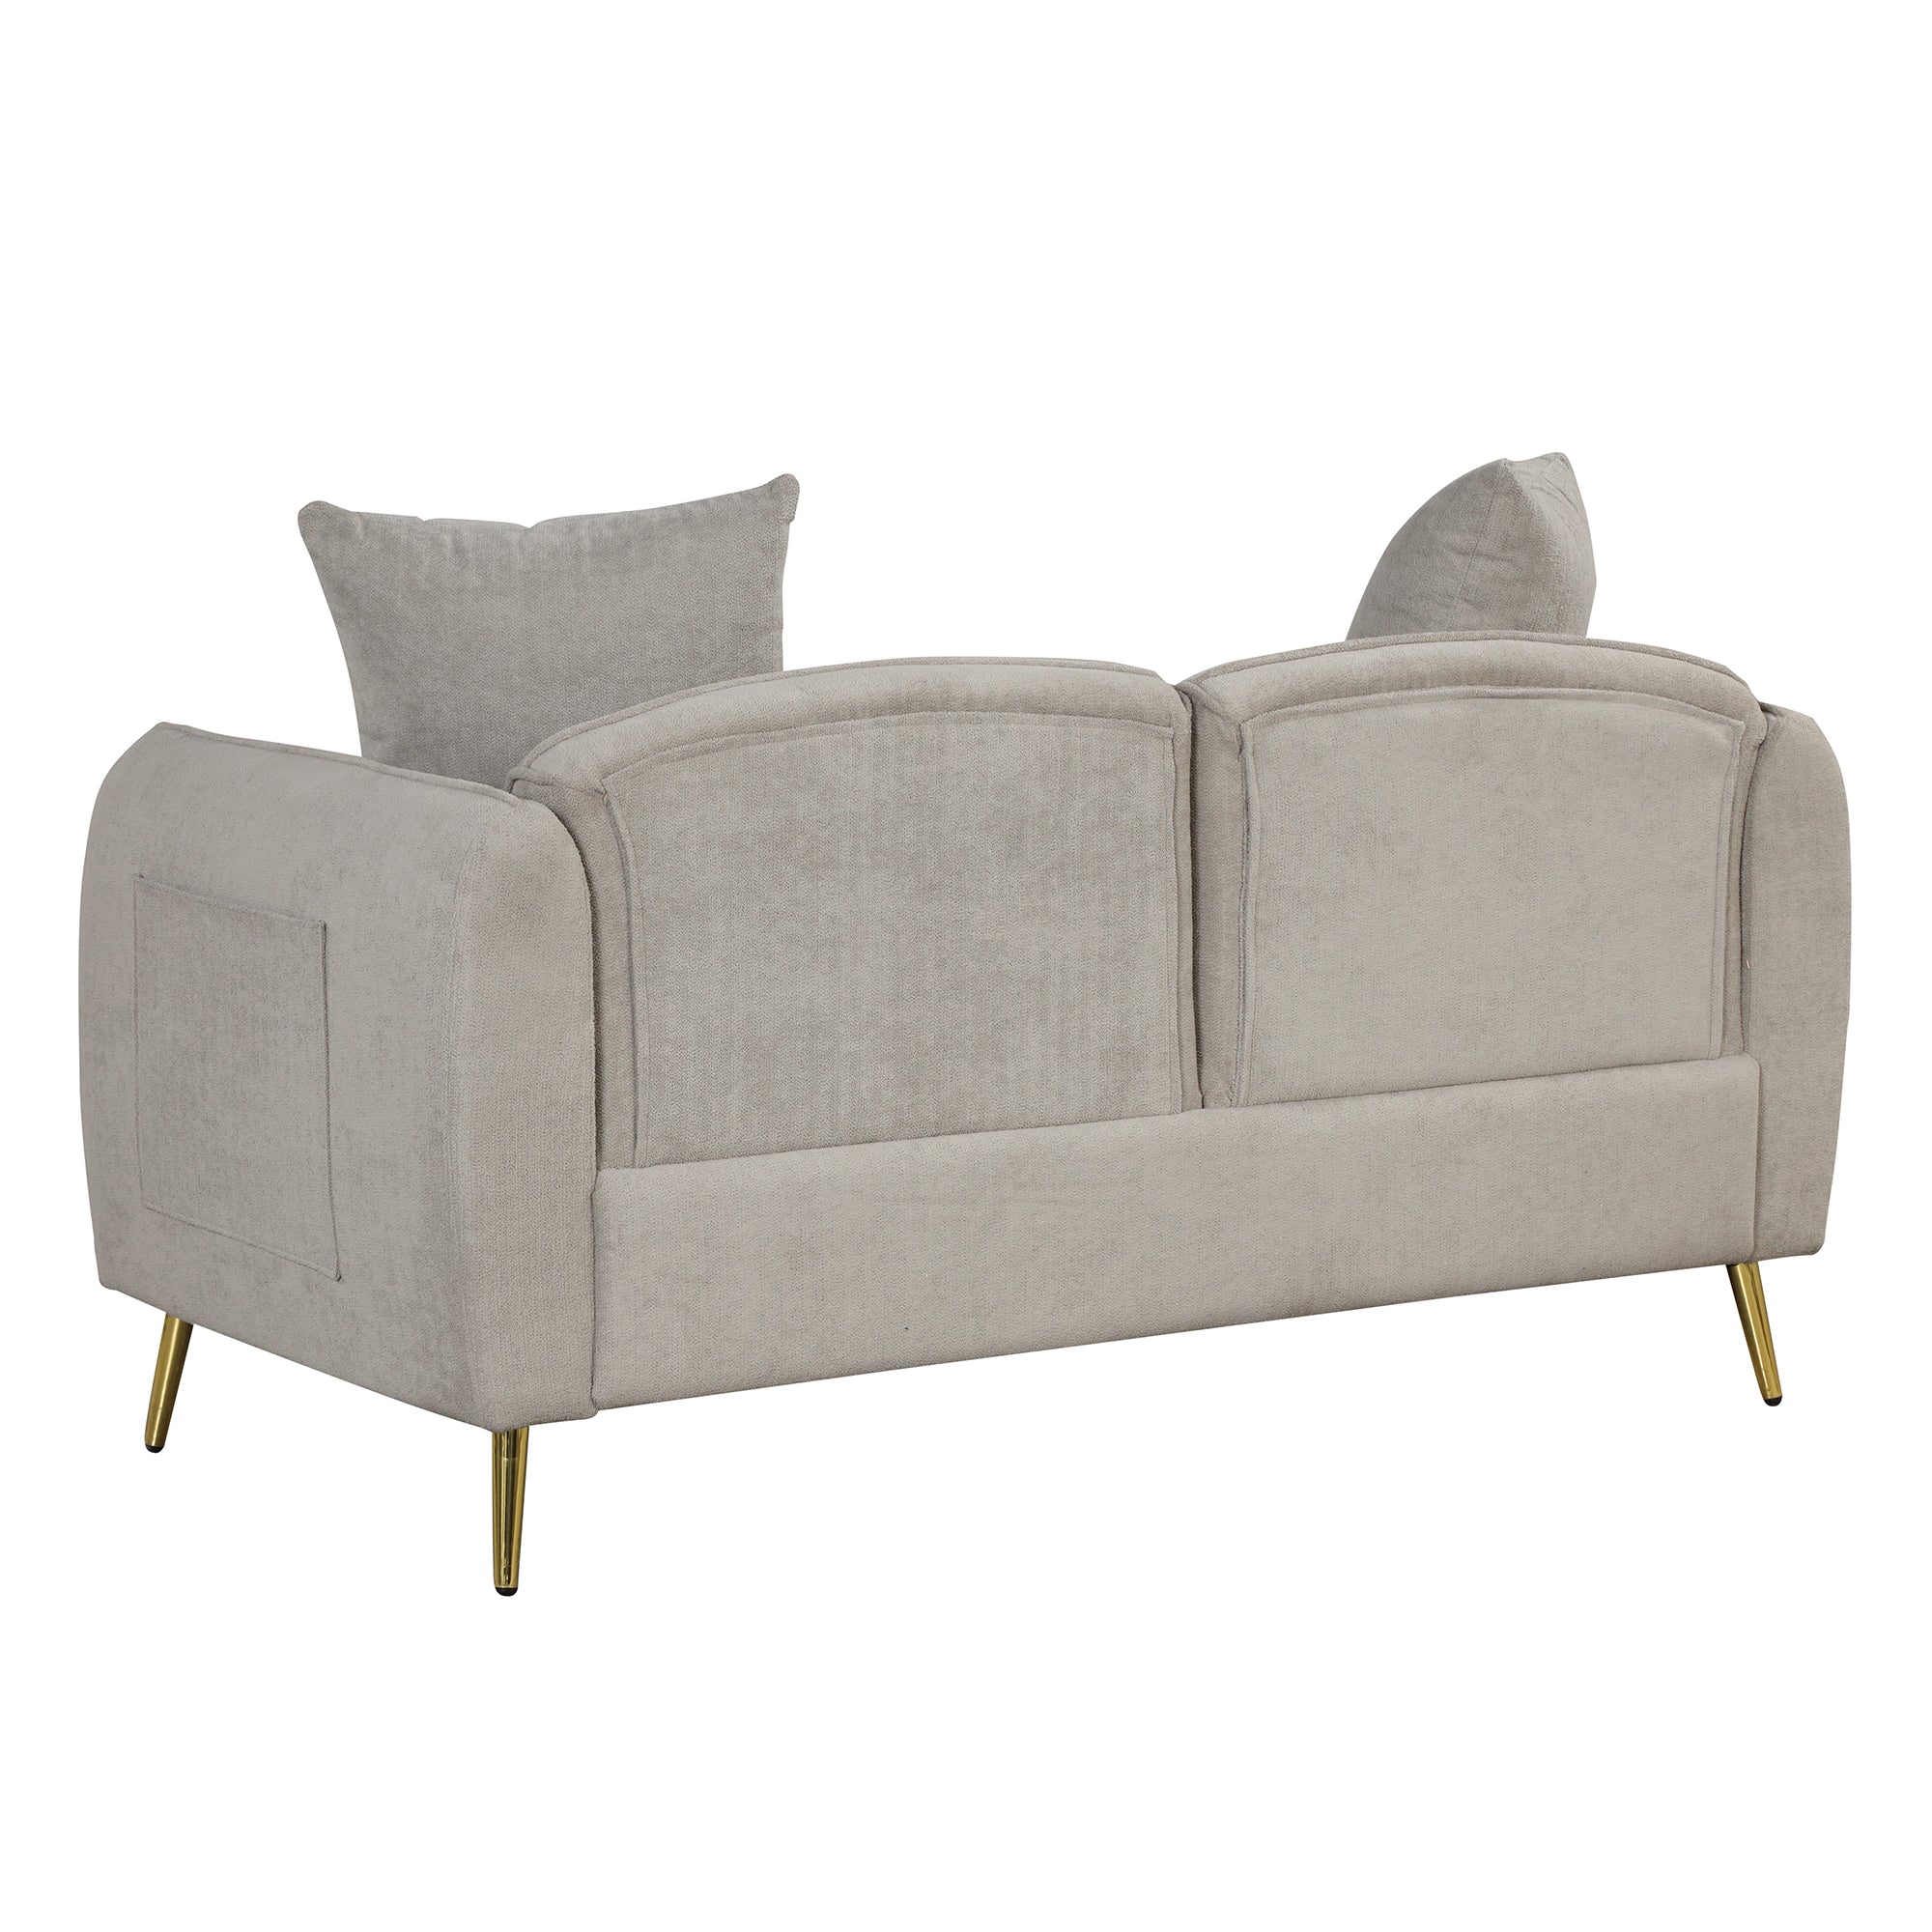 Sofa Set for Living Room 3 Seaters Velvet Upholstery Sofa Couch